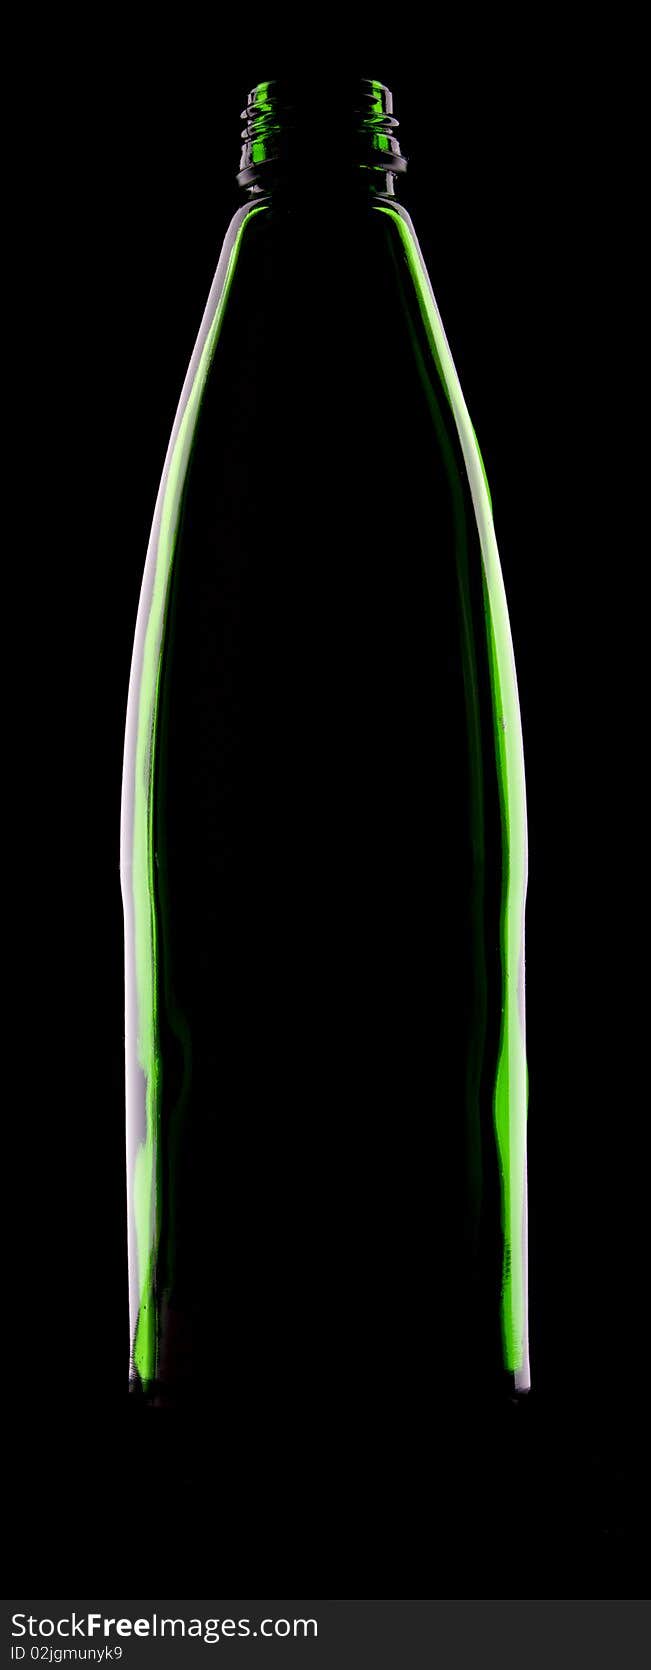 Empty green glass bottle on the black background. Empty green glass bottle on the black background